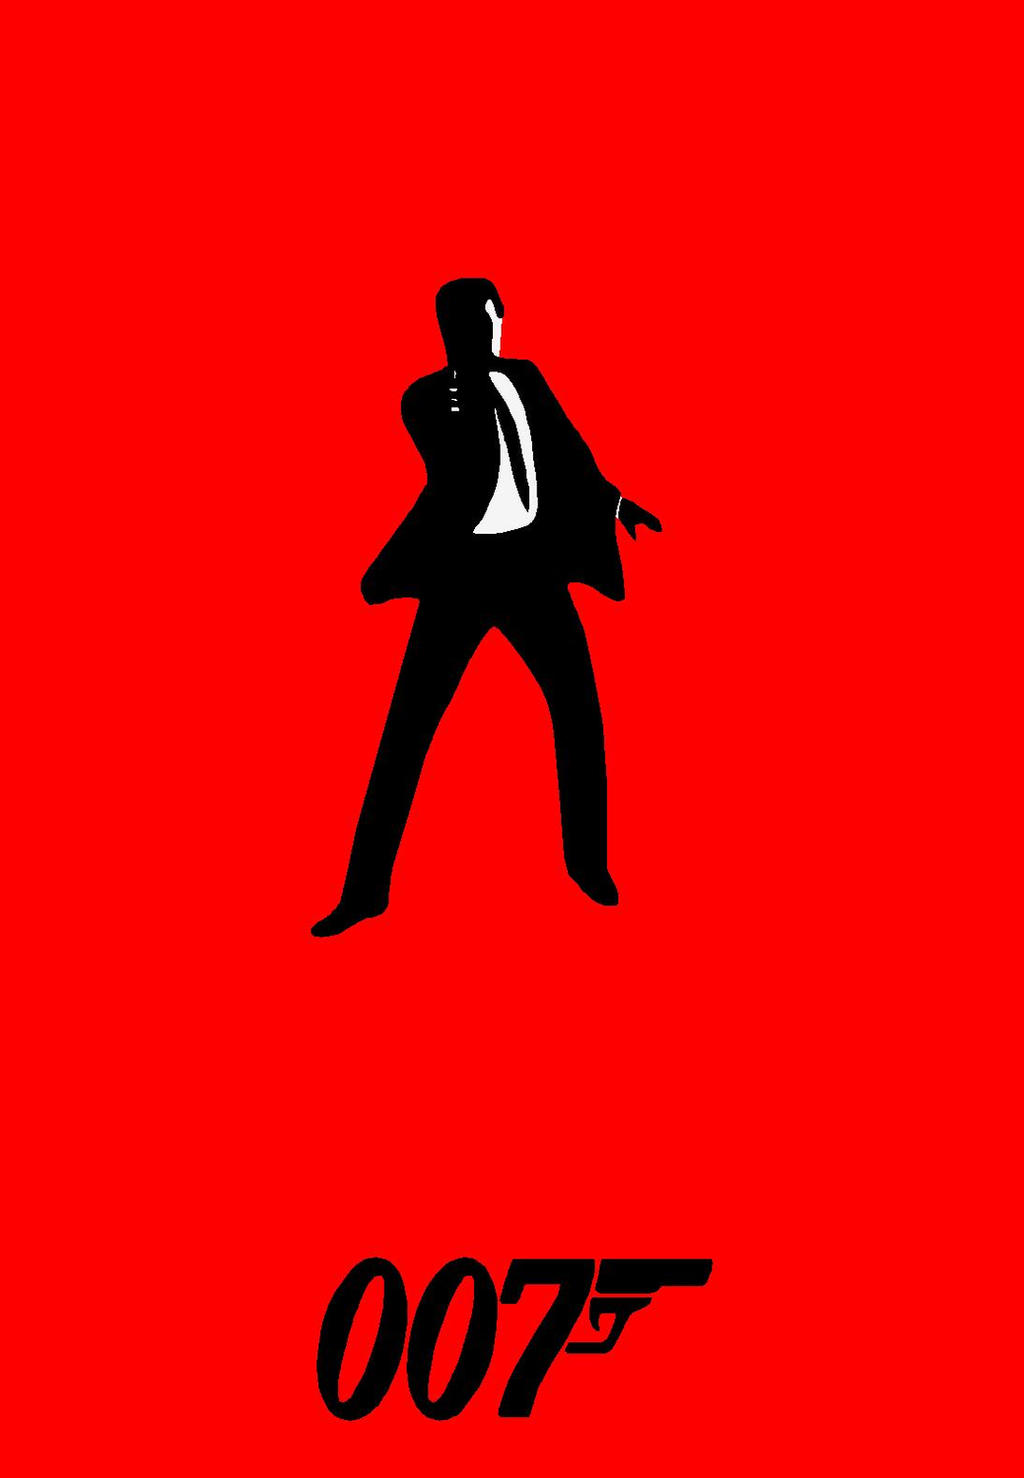 James Bond Minimal Movie Poster 1 by ESPIOARTWORK-102 on DeviantArt